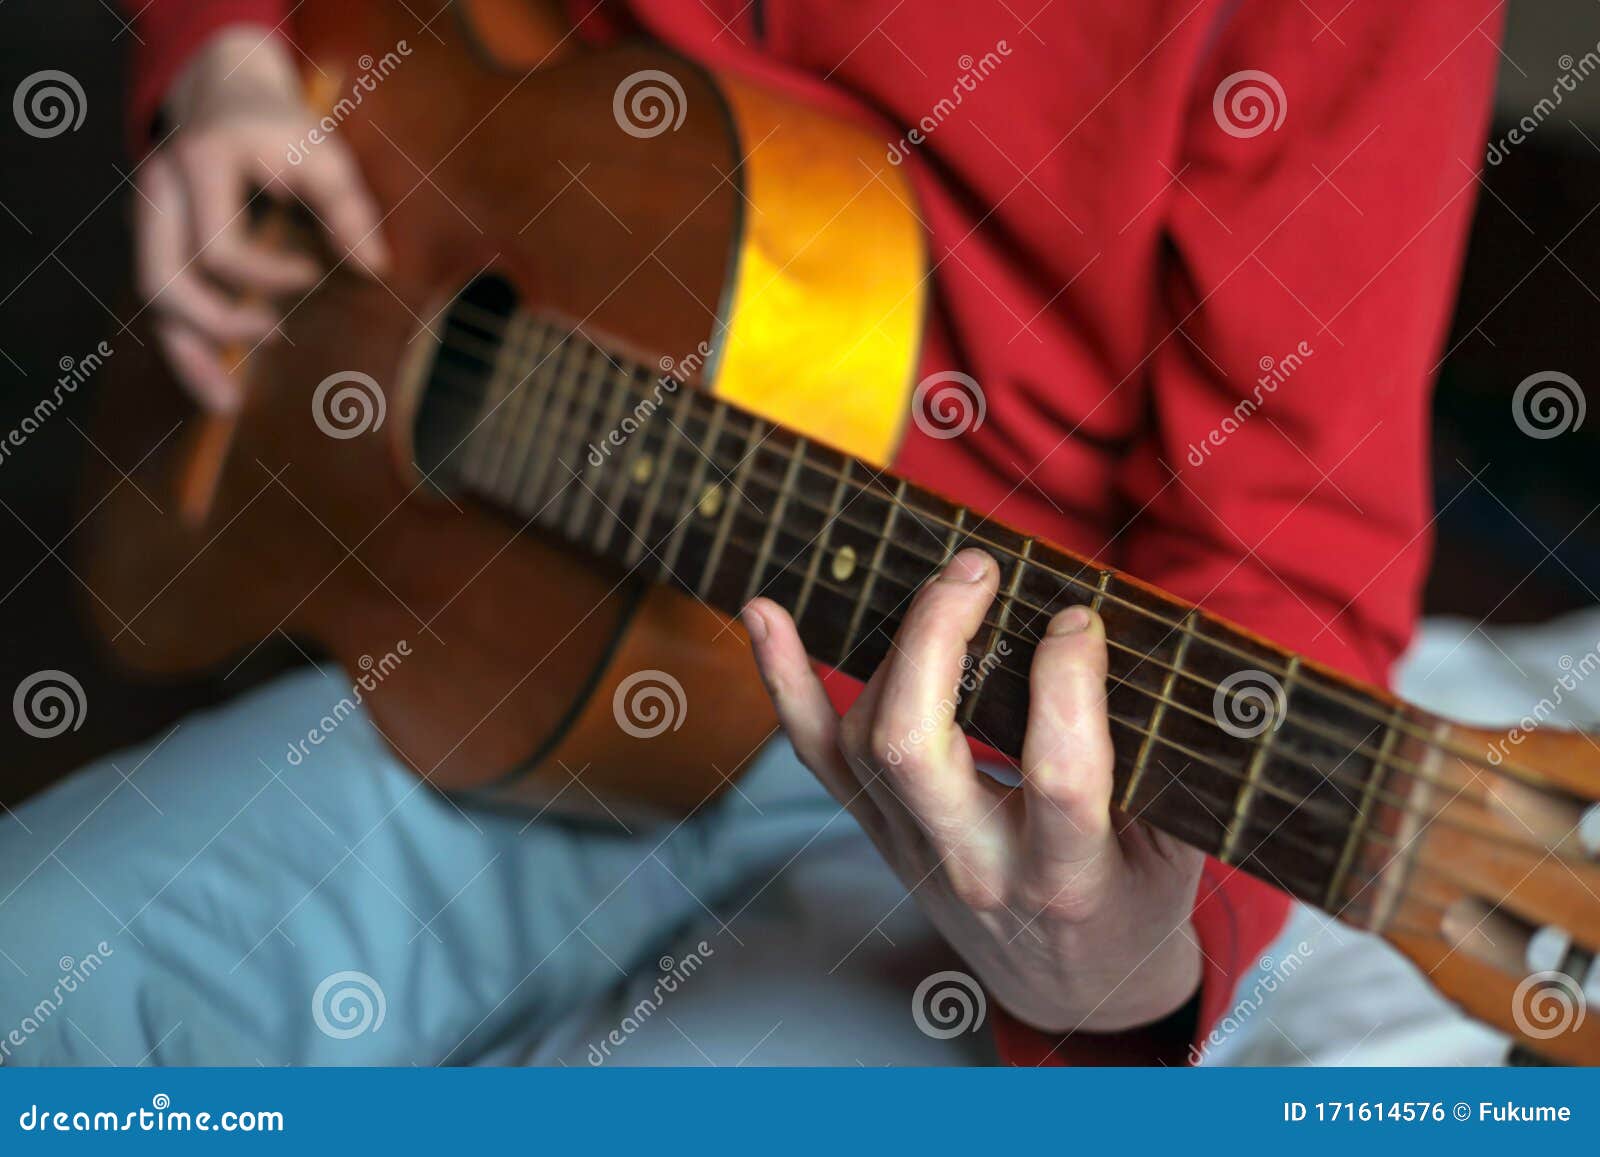 virtuoso guitarist playing his acoustic guitar